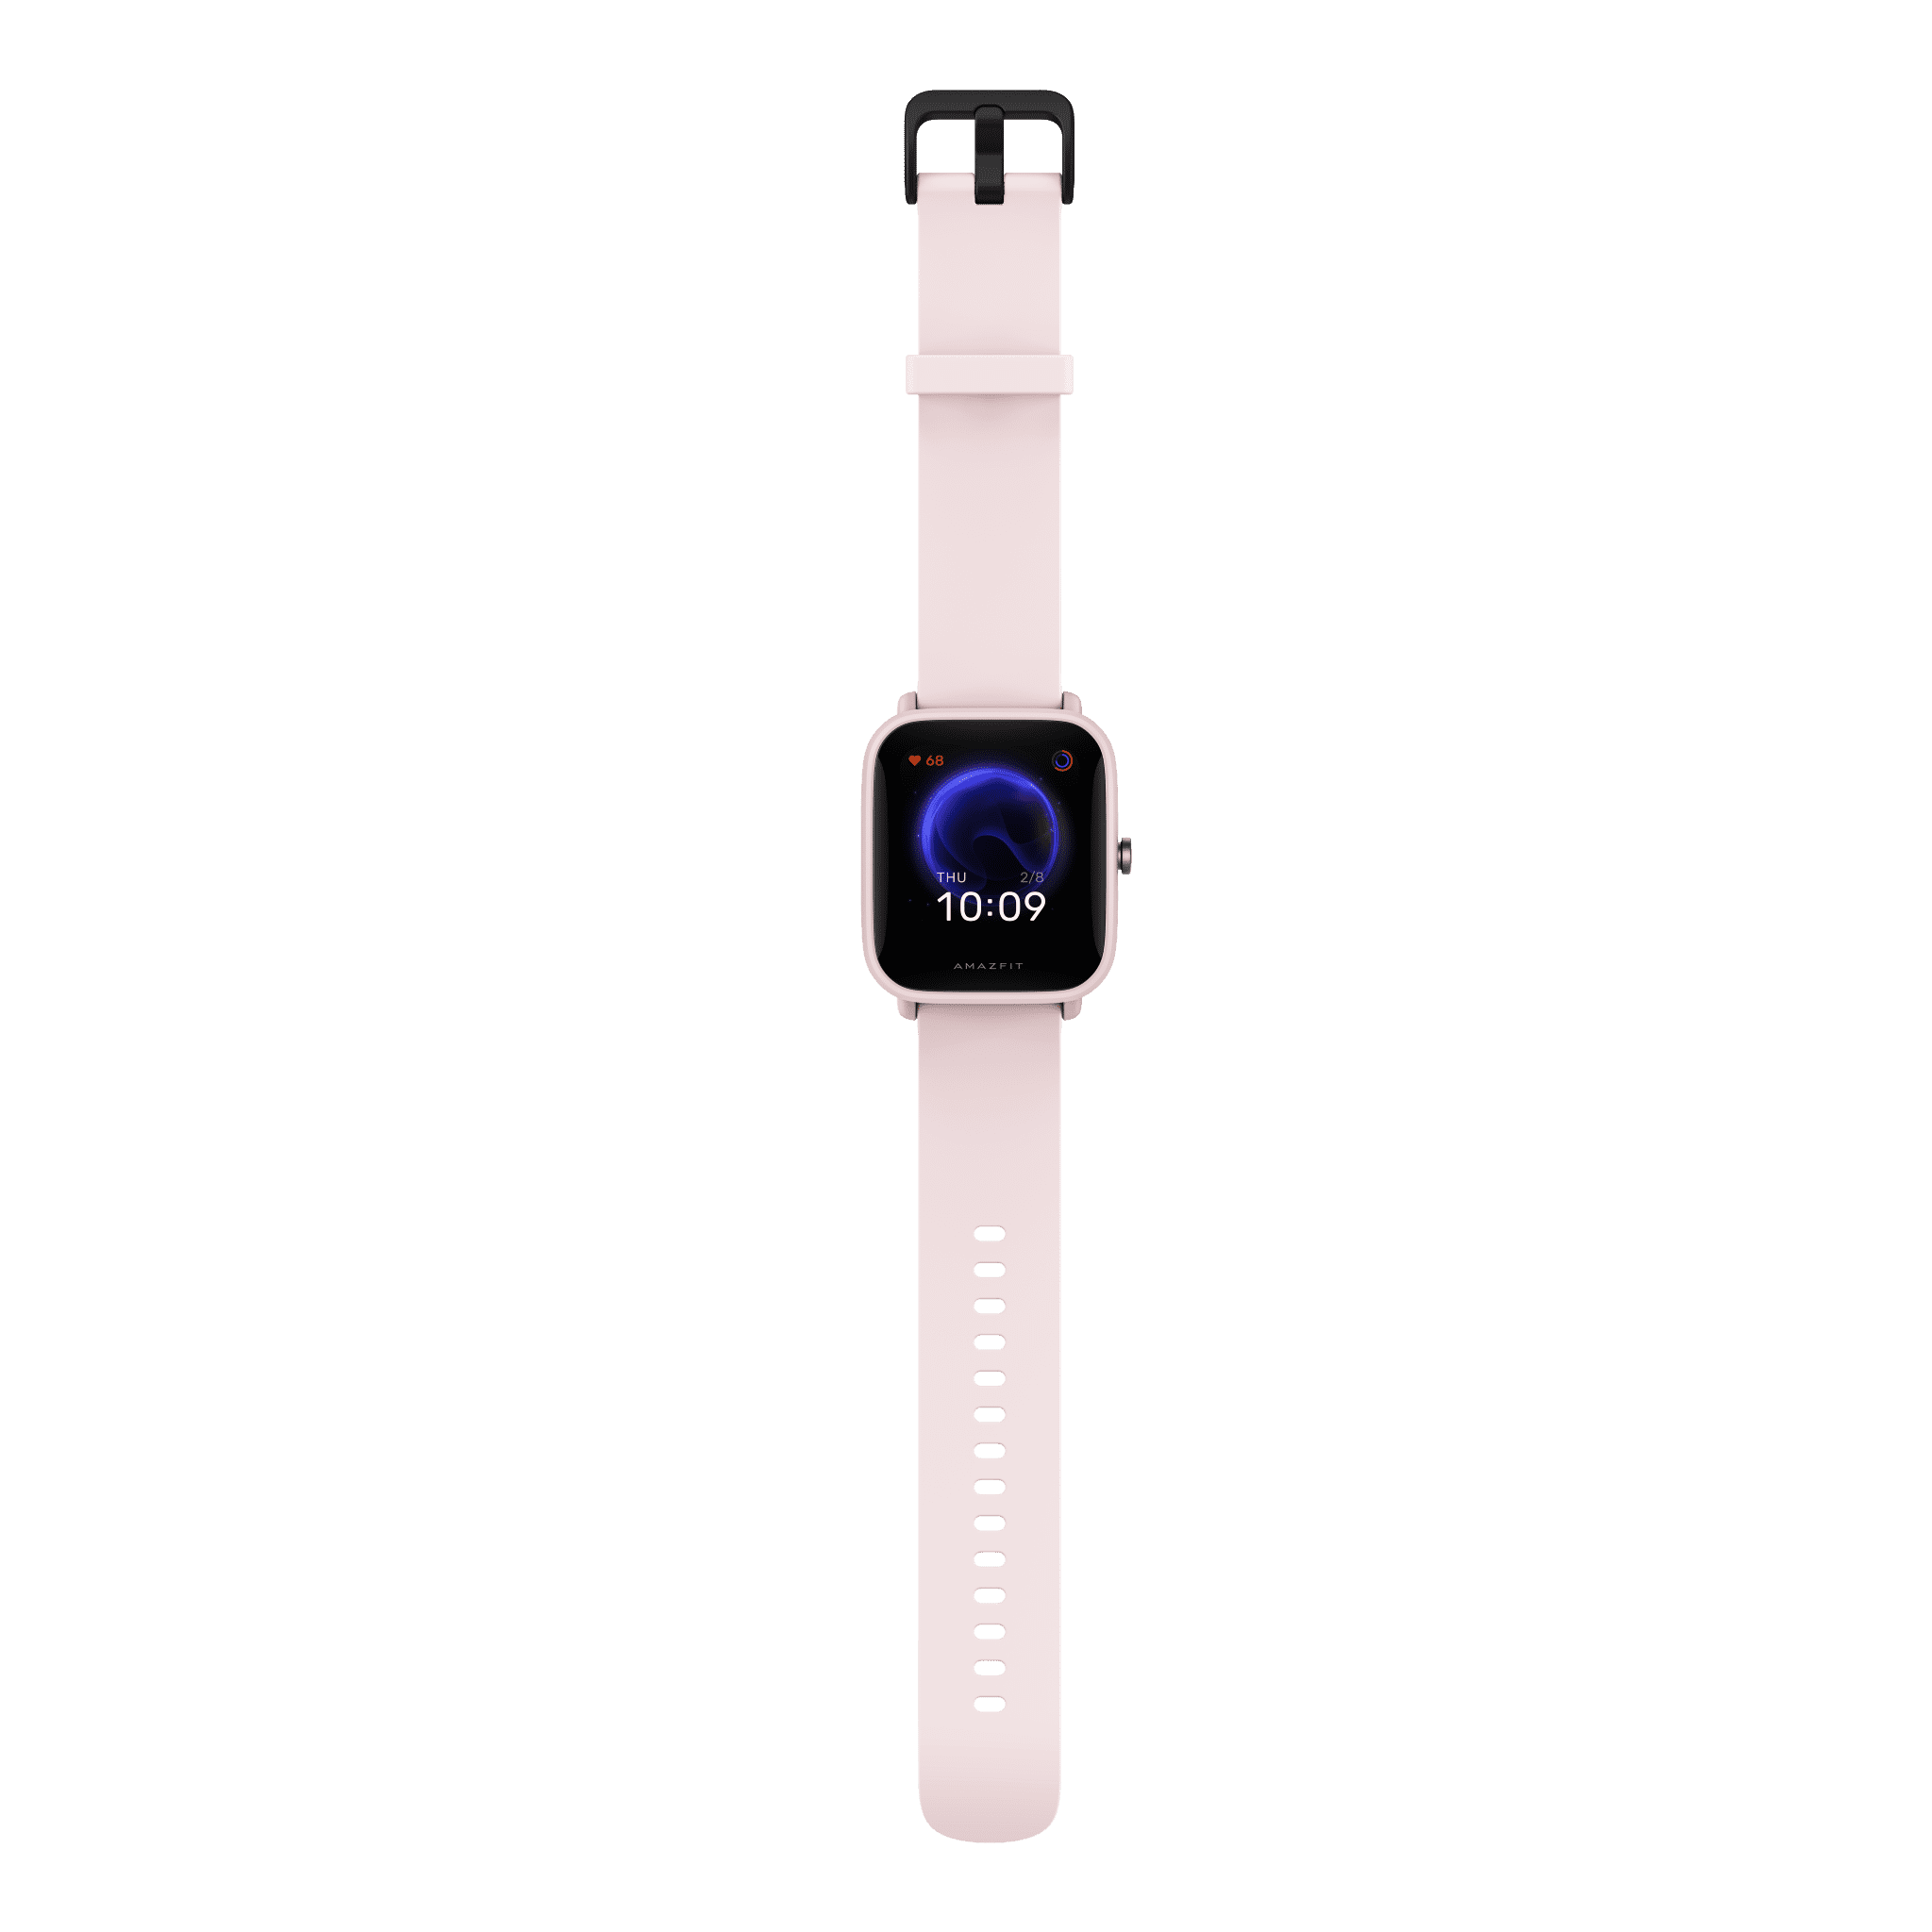 Amazfit Bip U Pro Smart Watch: for Men & Women - GPS Fitness Tracker with  60+ Sport Modes 